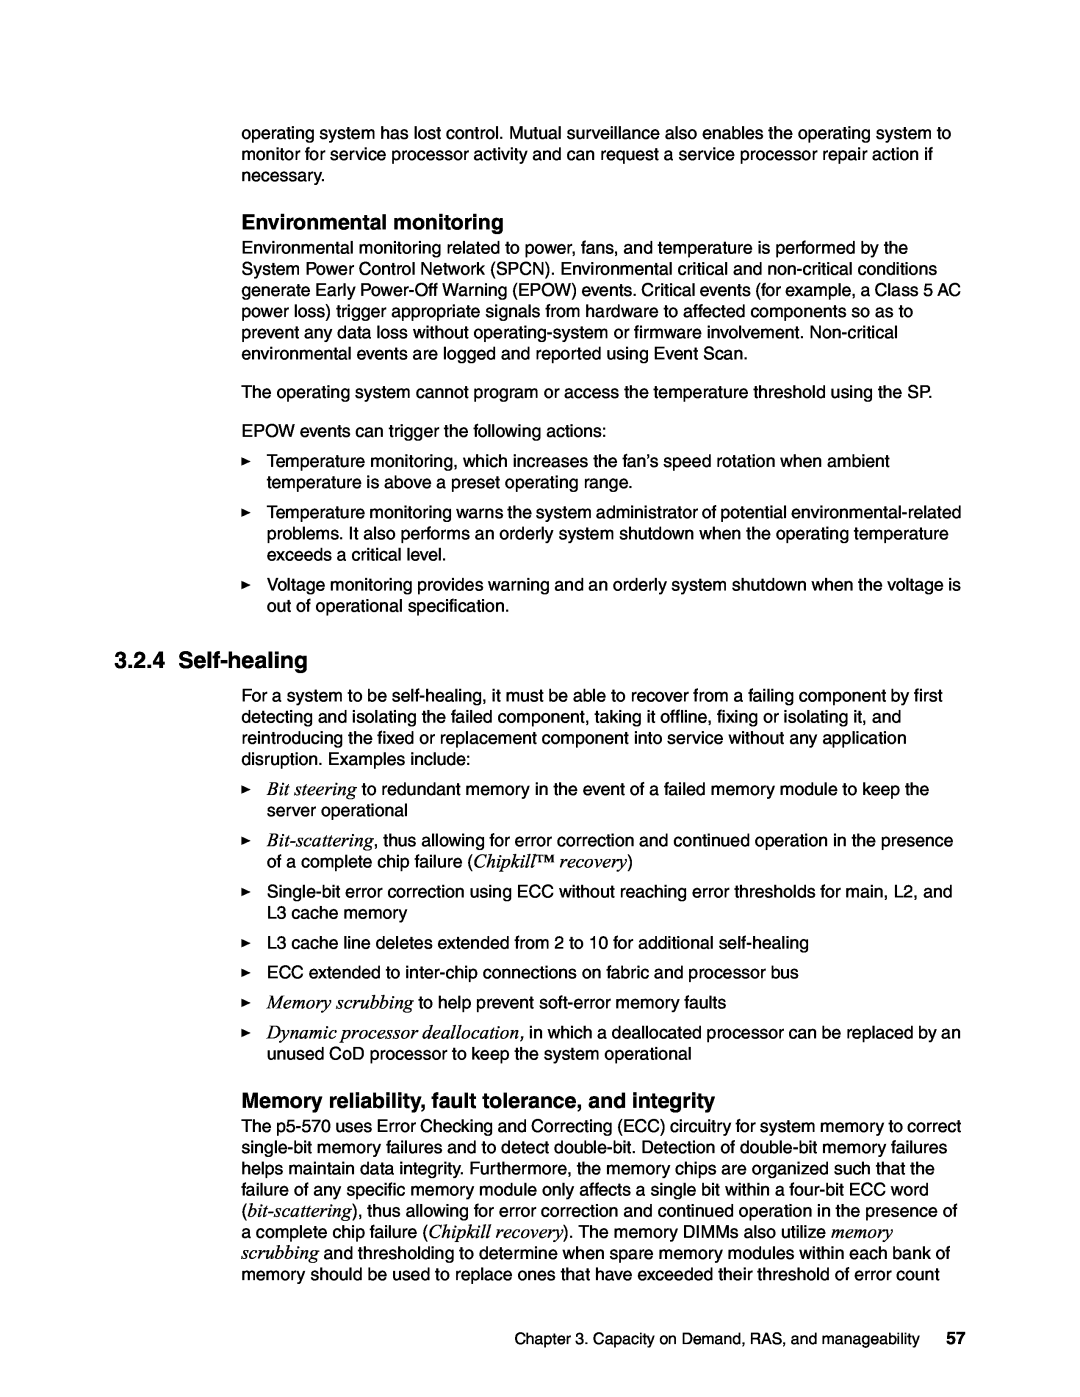 IBM P5 570 manual 3.2.4Self-healing, Environmental monitoring 